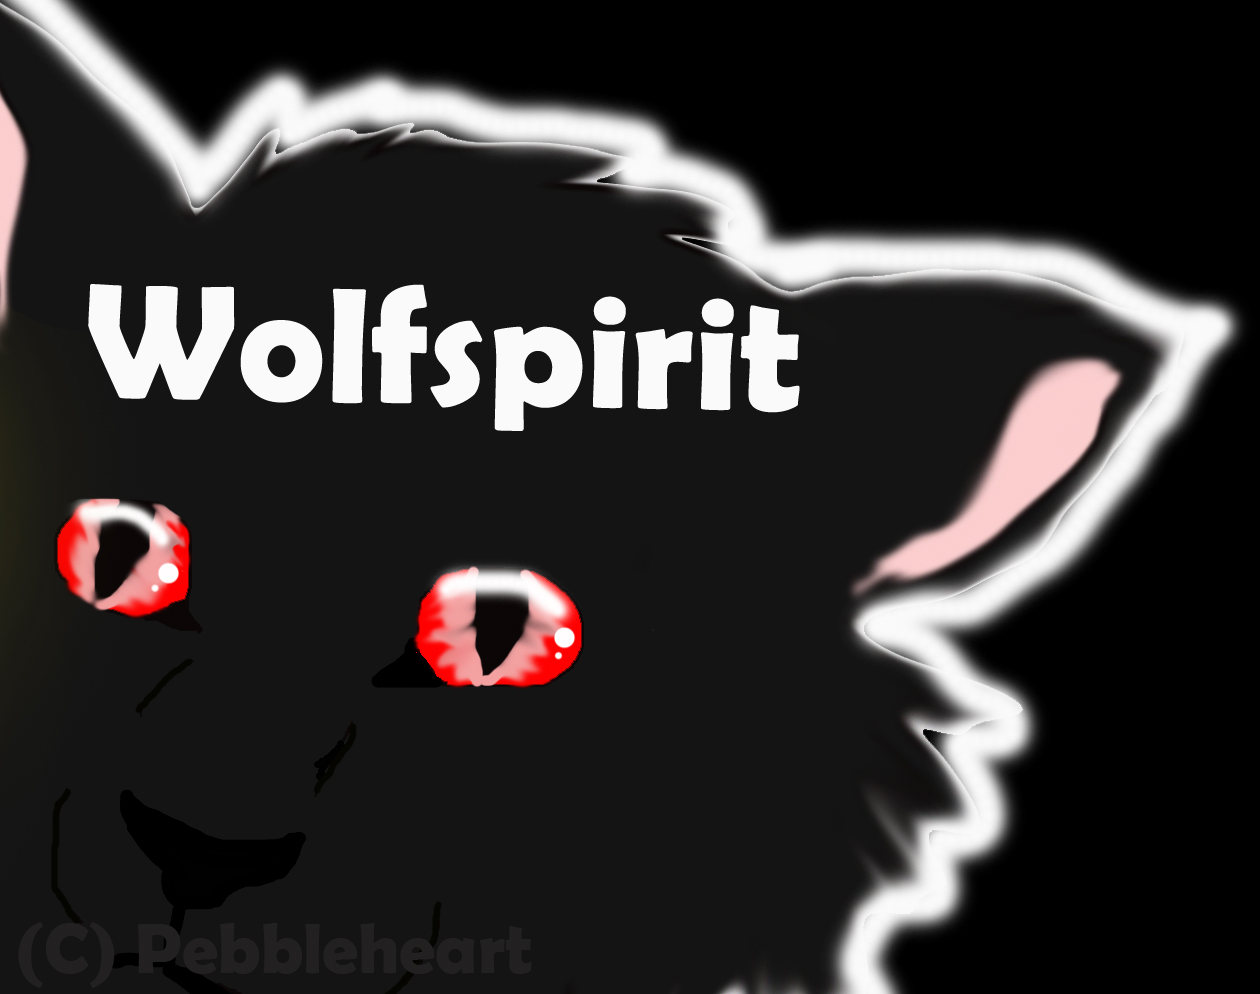 Wolfspirit by Pebbleheart